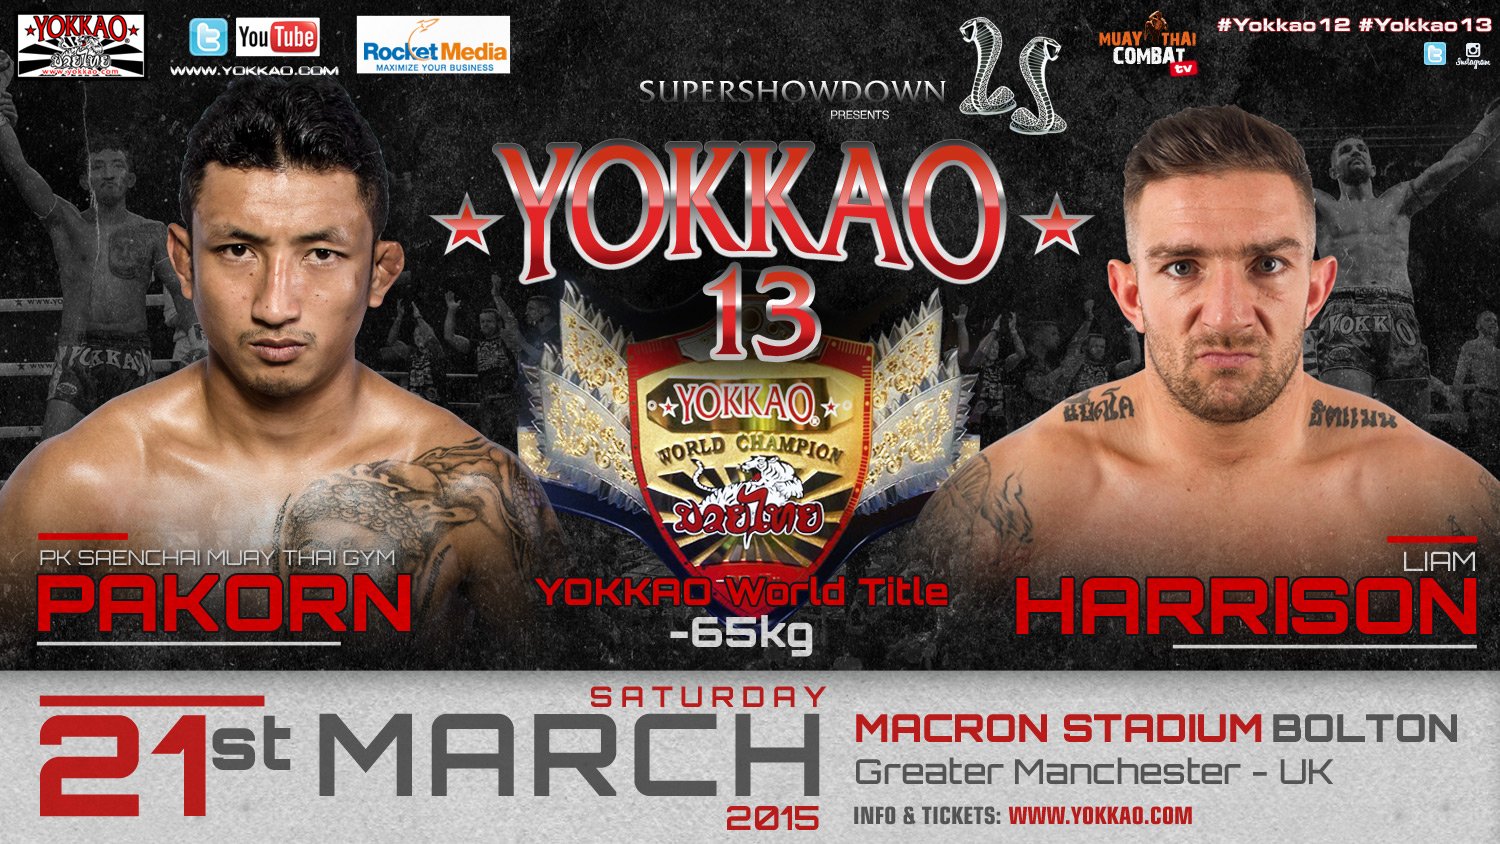 YOKKAO 13: Pakorn vs Liam Harrison for the Yokkao World Title 65kg!